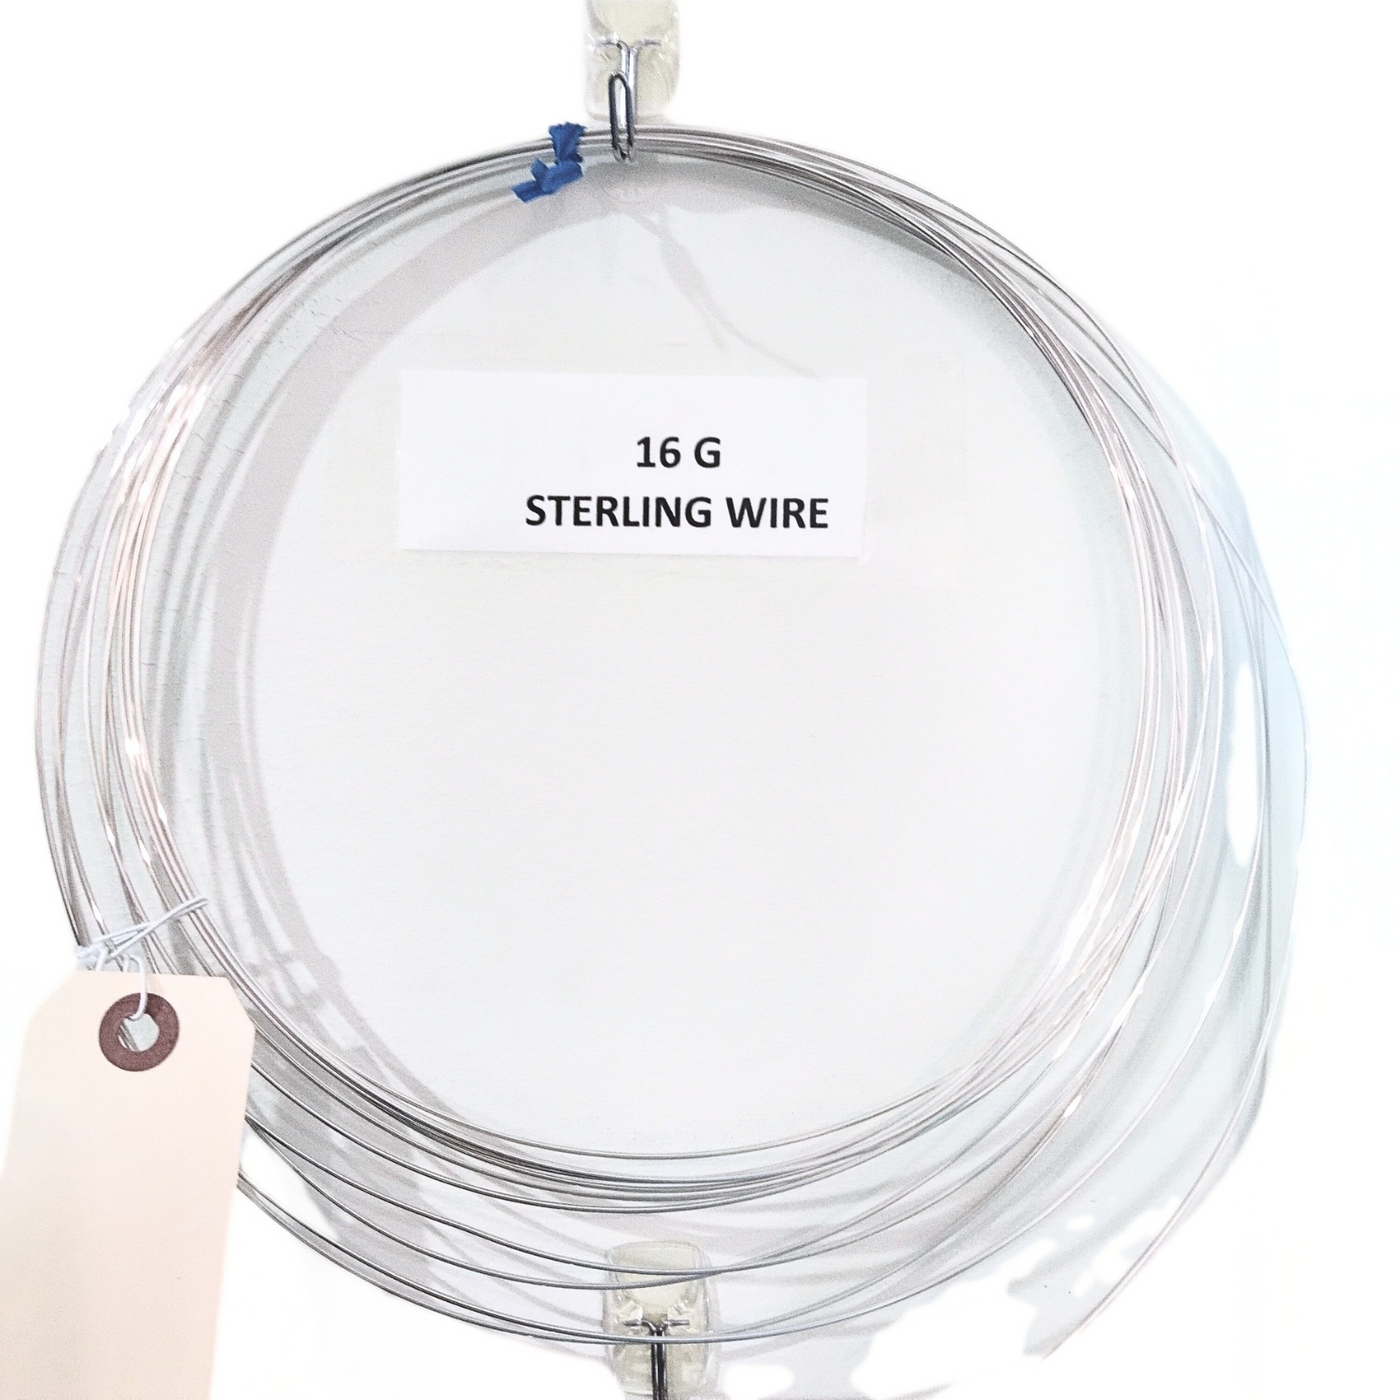 16g Sterling Wire, 1 Inch